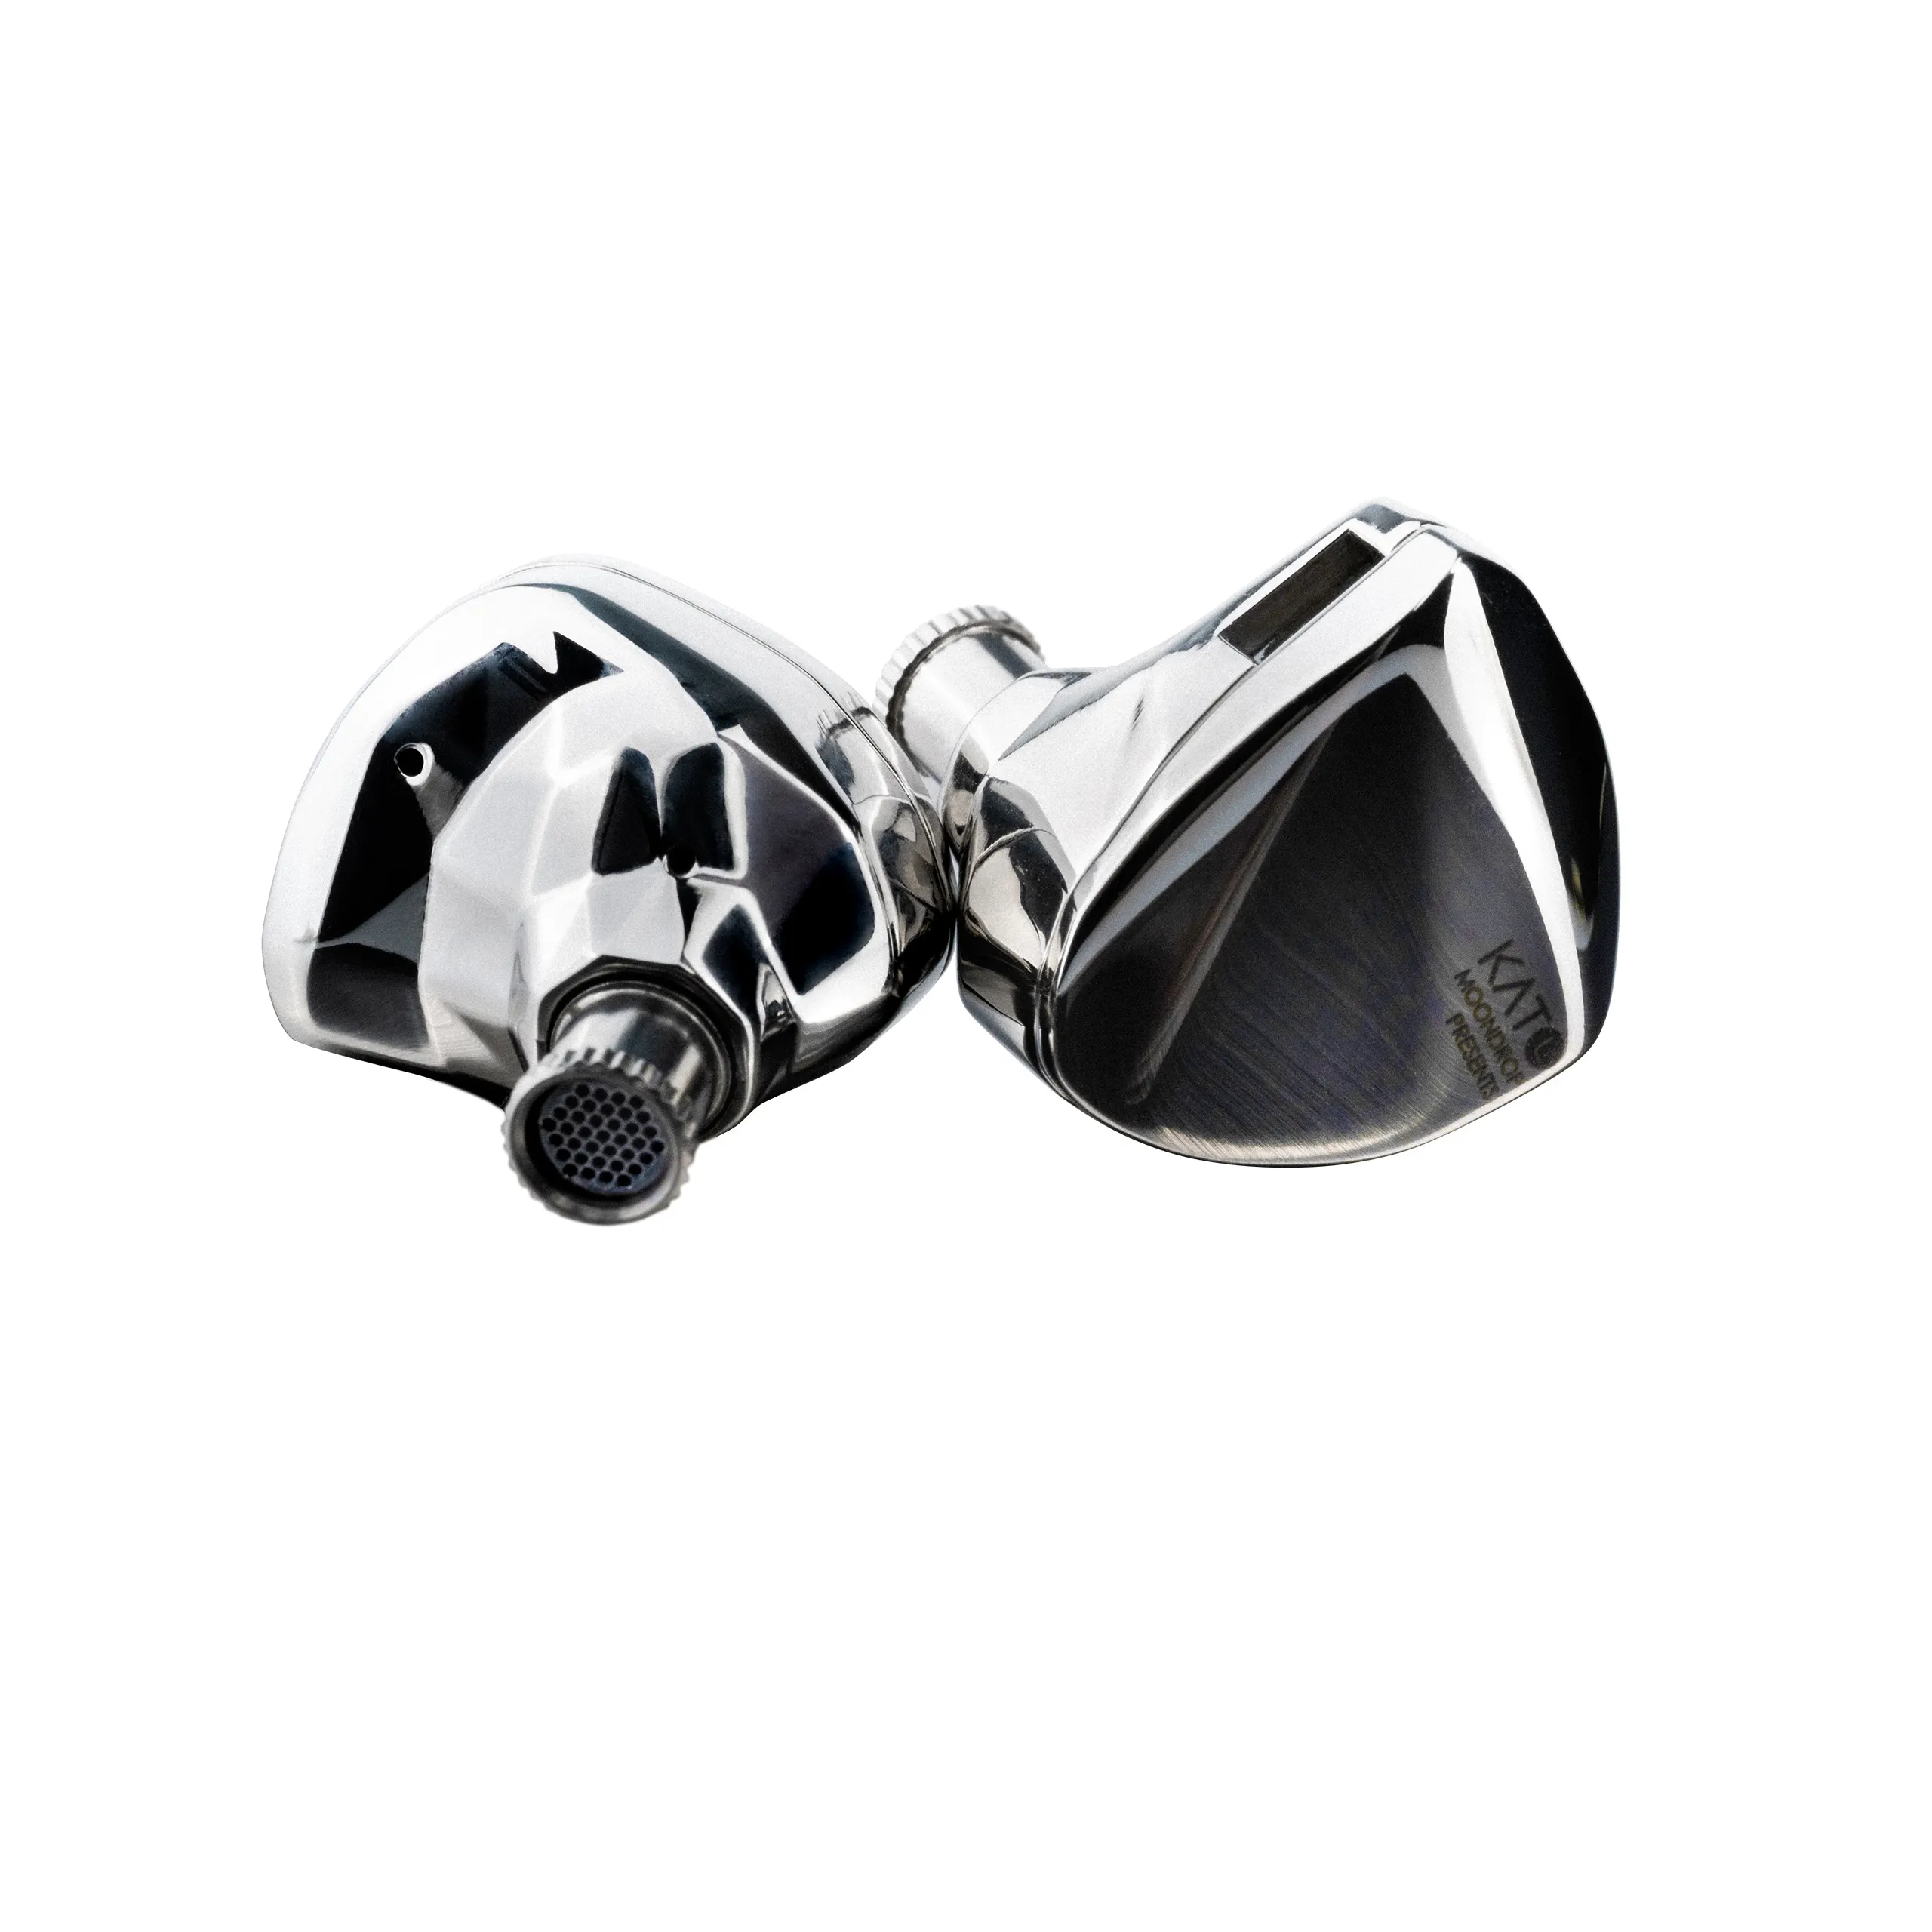 Moondrop Kato earphone in-ear berkabel 3.5mm driver dinamis dewasa headphone stereo bass